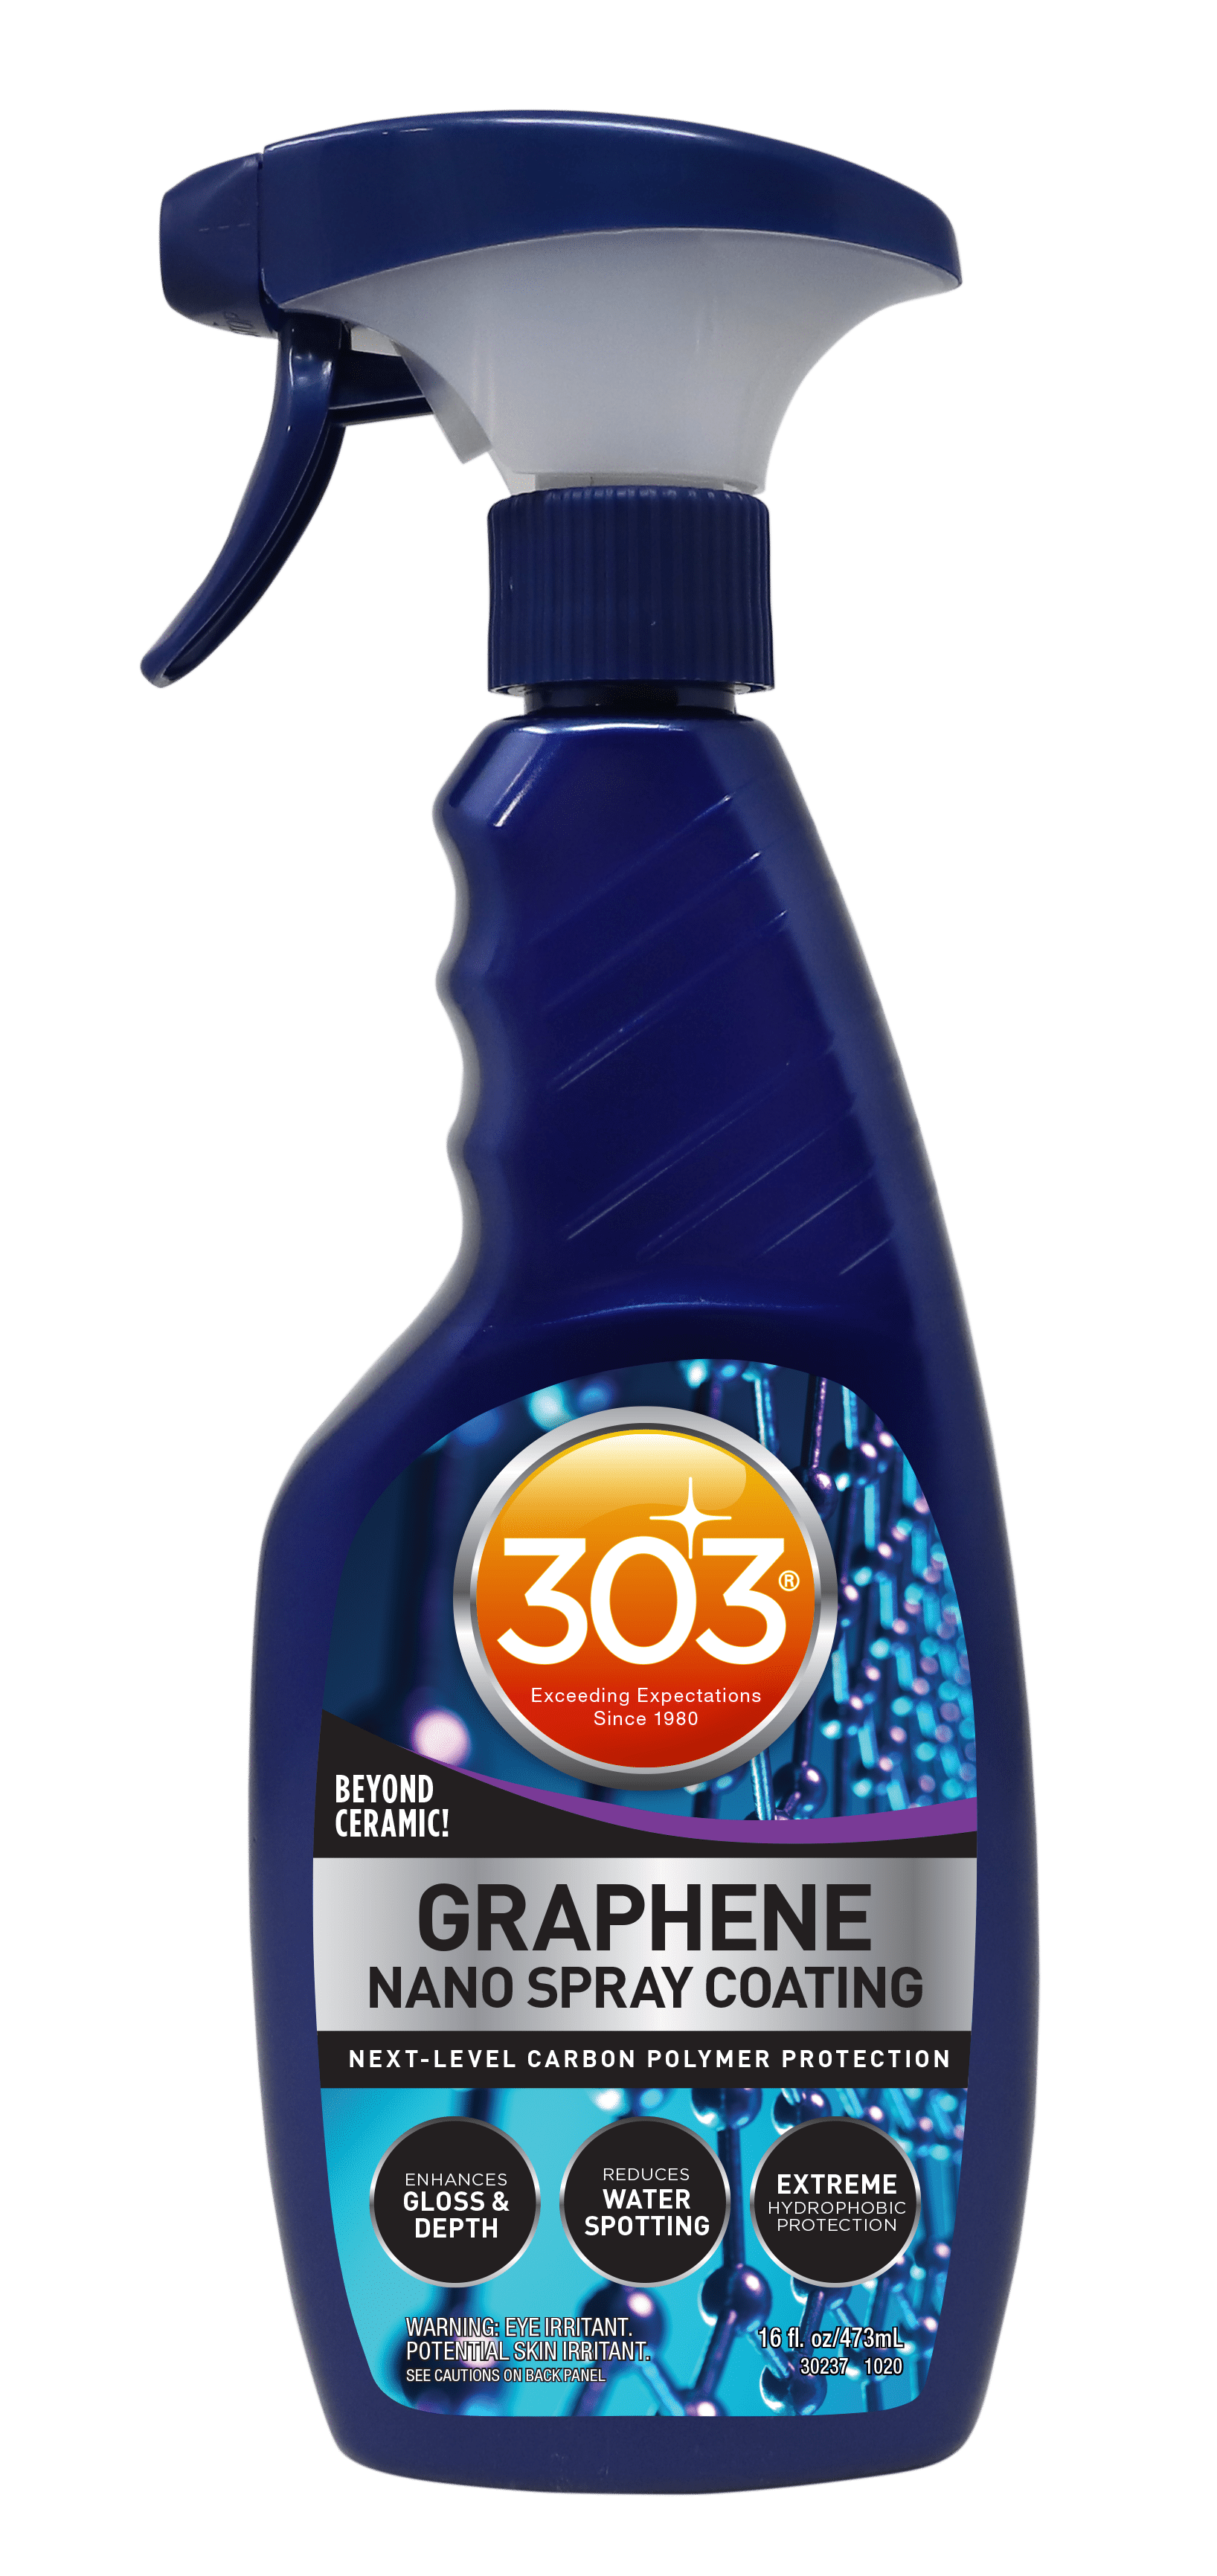 303 Spray & Rinse Ceramic Sealant (16oz) – 303 Car Care